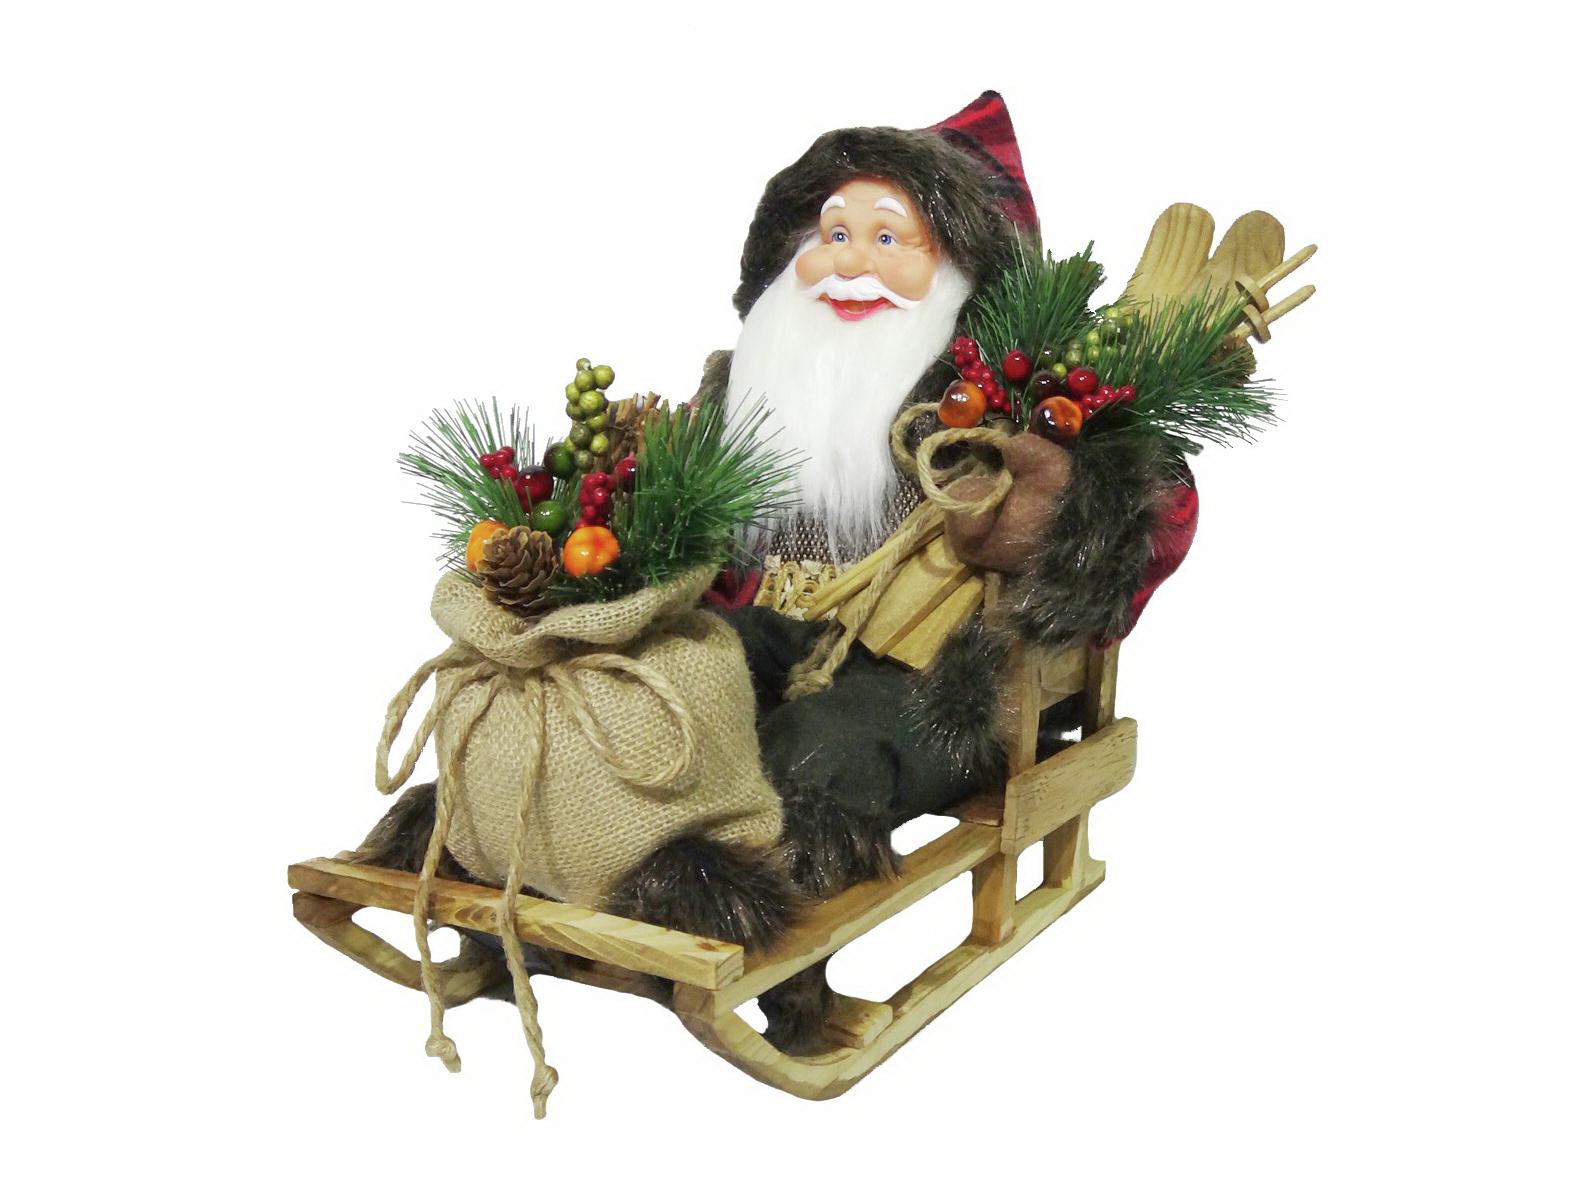 Vánoční figurína Santa  Claus na saních, 45cm